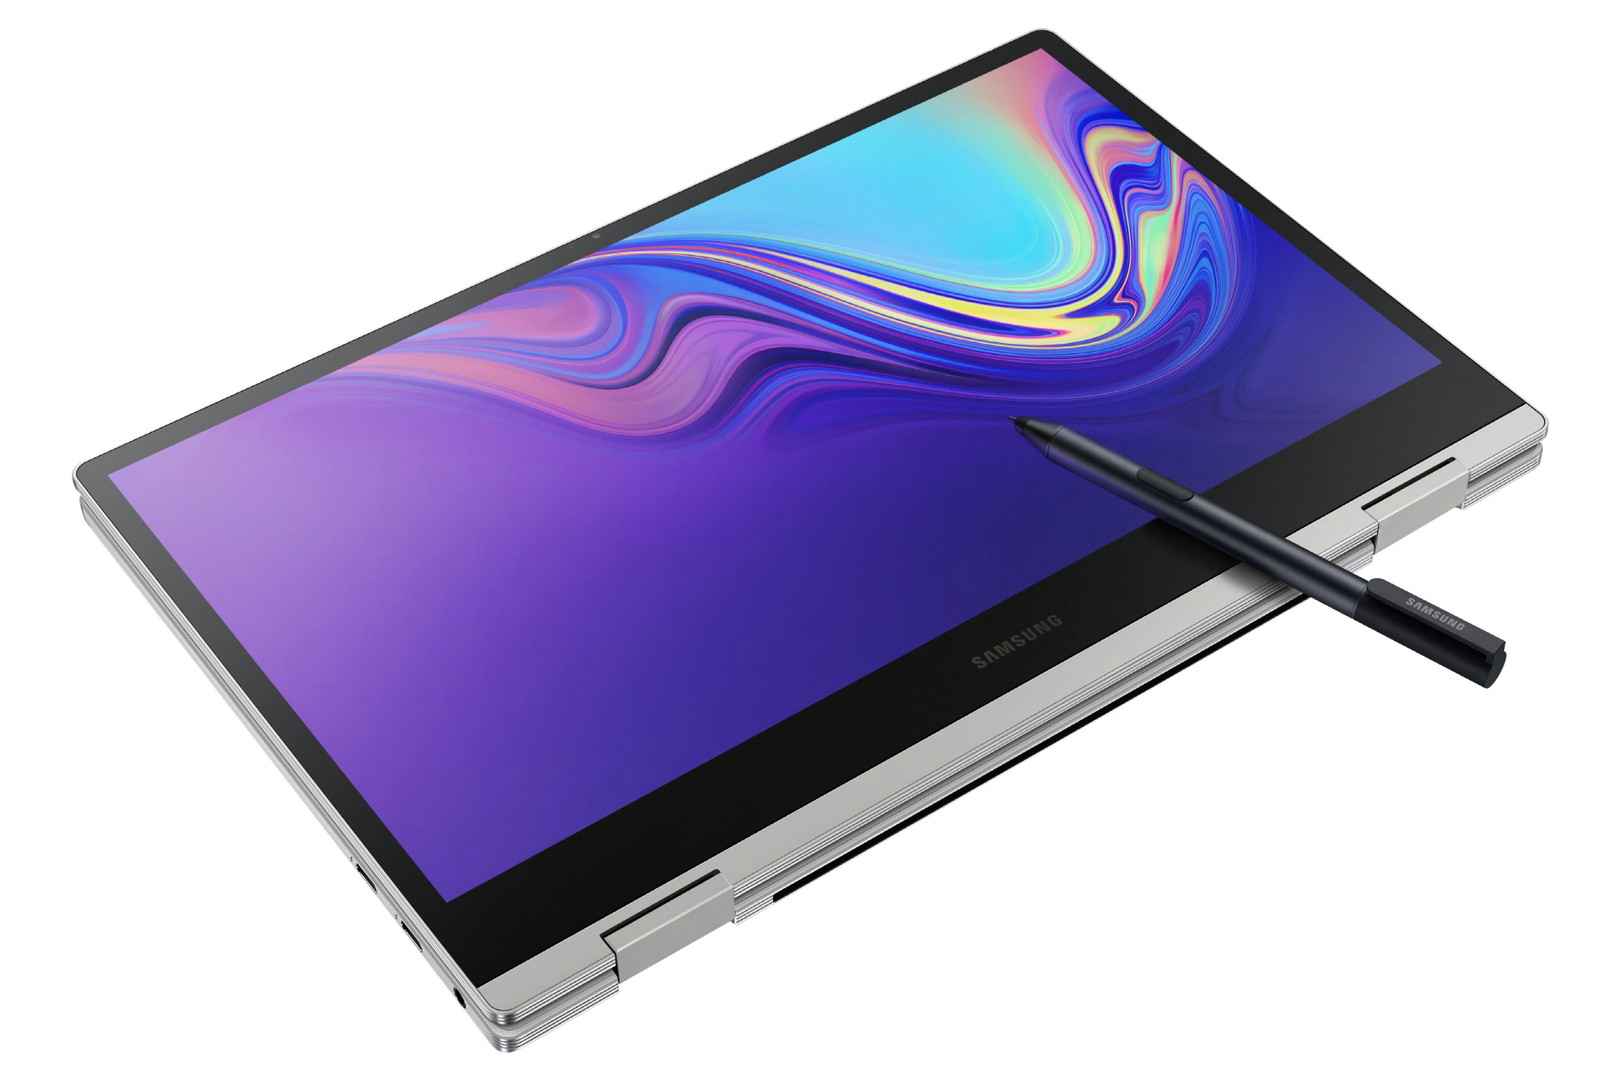 Samsung Notebook 9 Pro 2019 specs